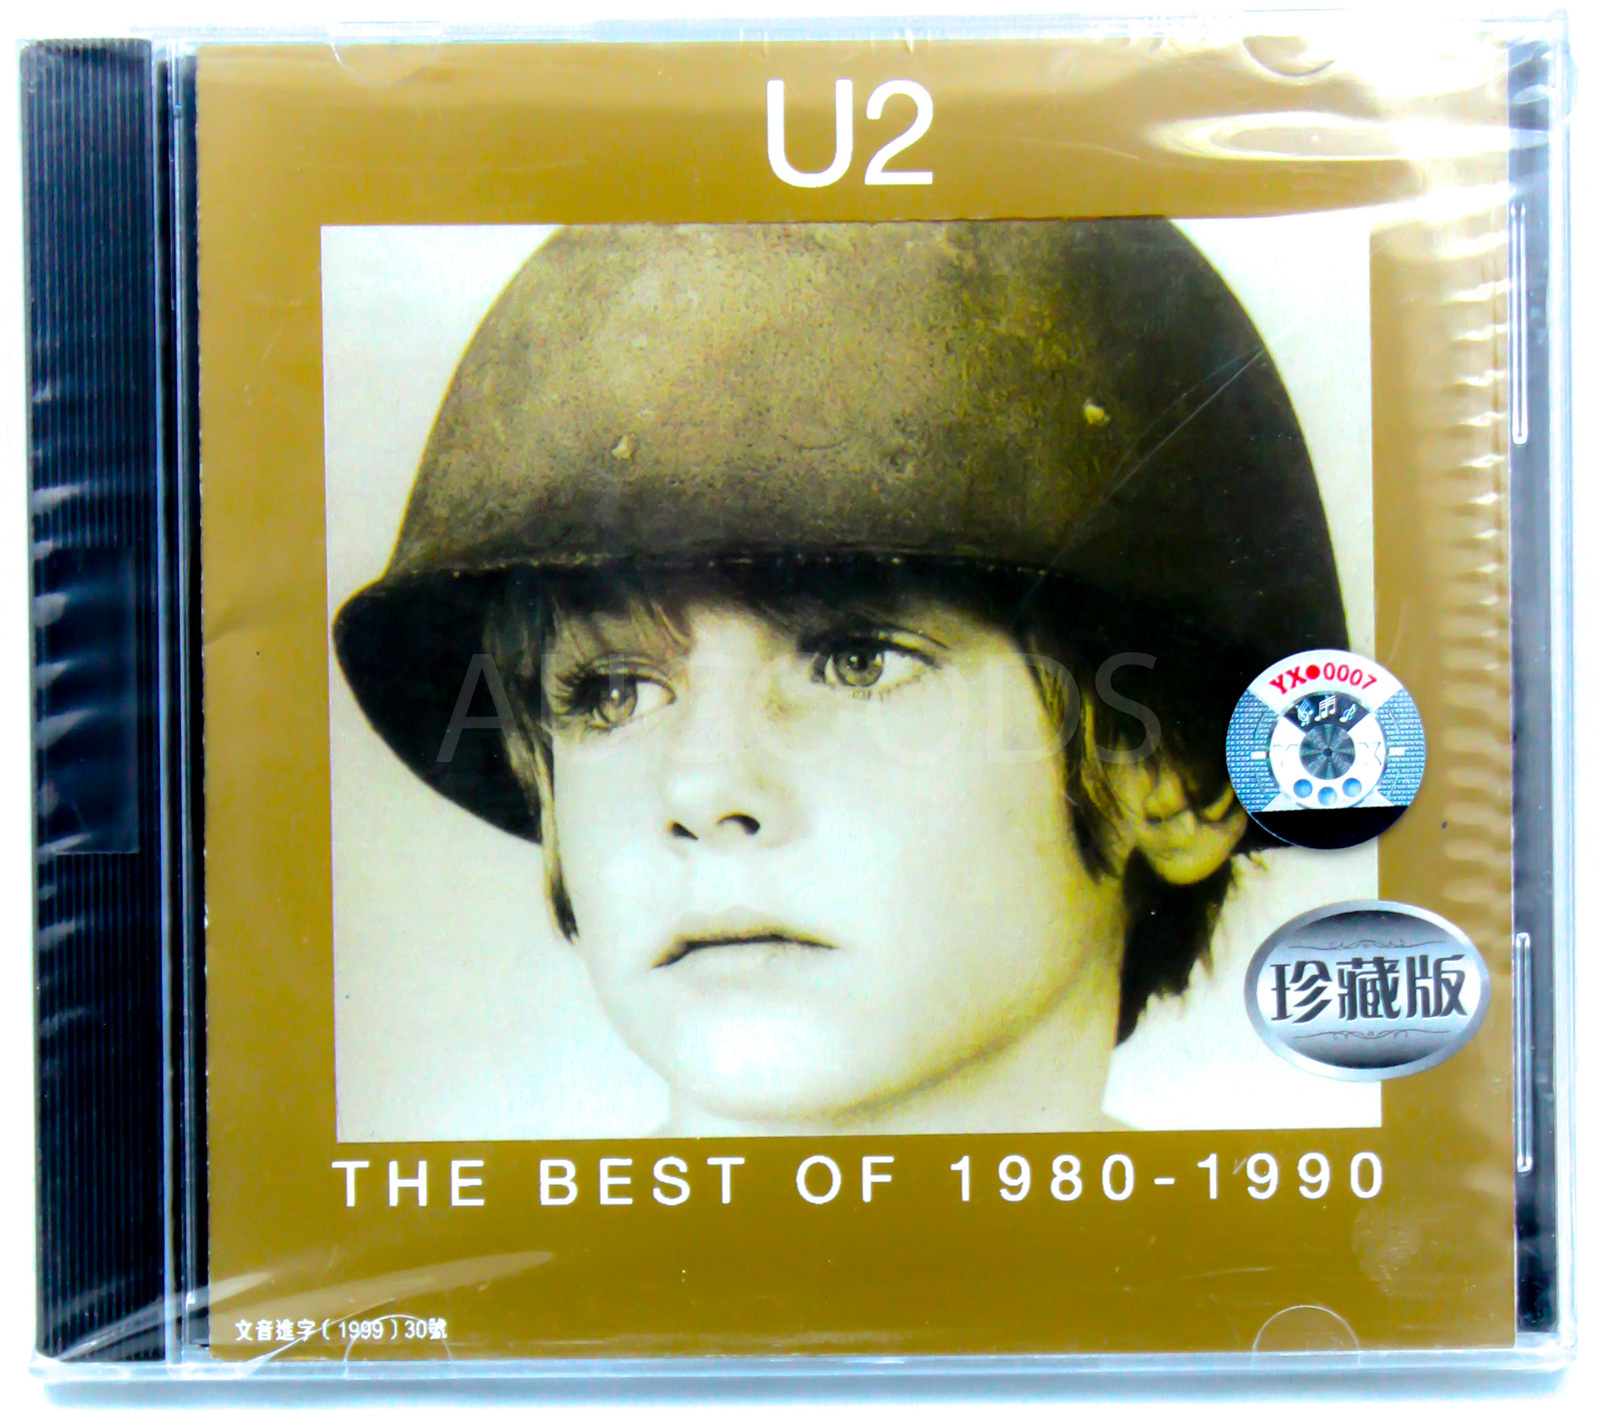 U2 The Best of 1980-1990 NEW MUSIC ALBUM CD - AU STOCK | eBay